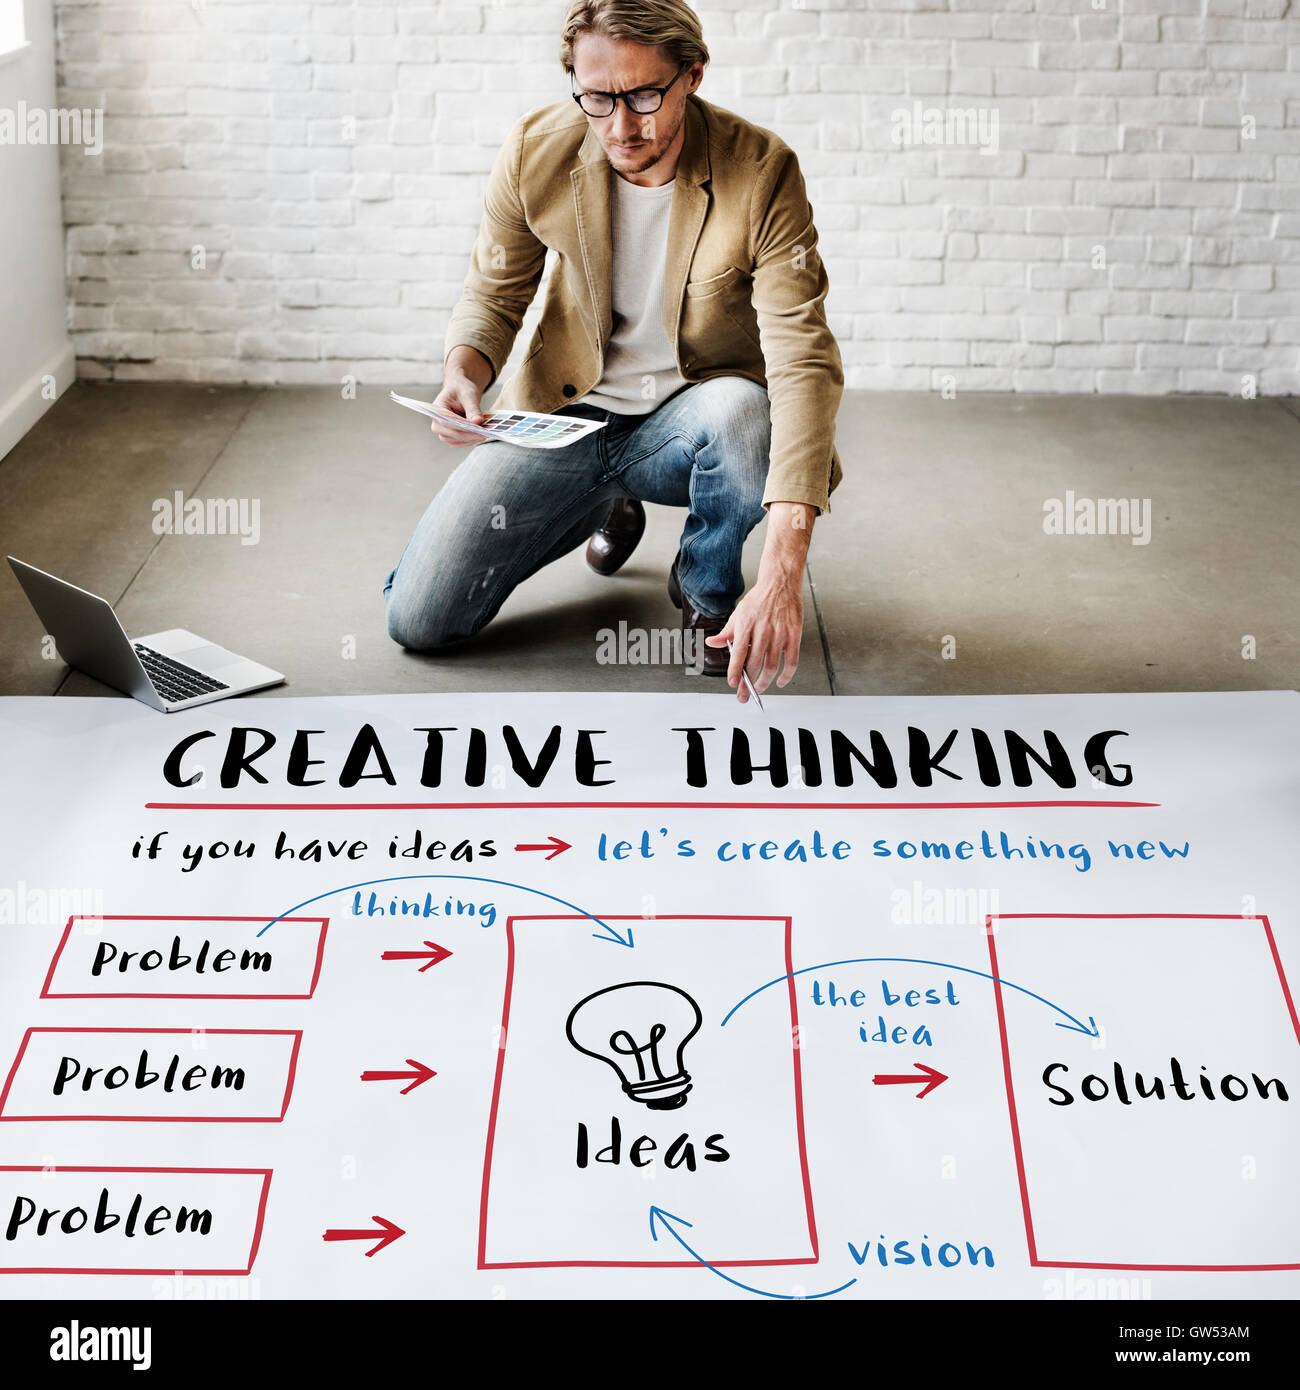 Creative Thinking Ideas Innovation Concept Stock Photo